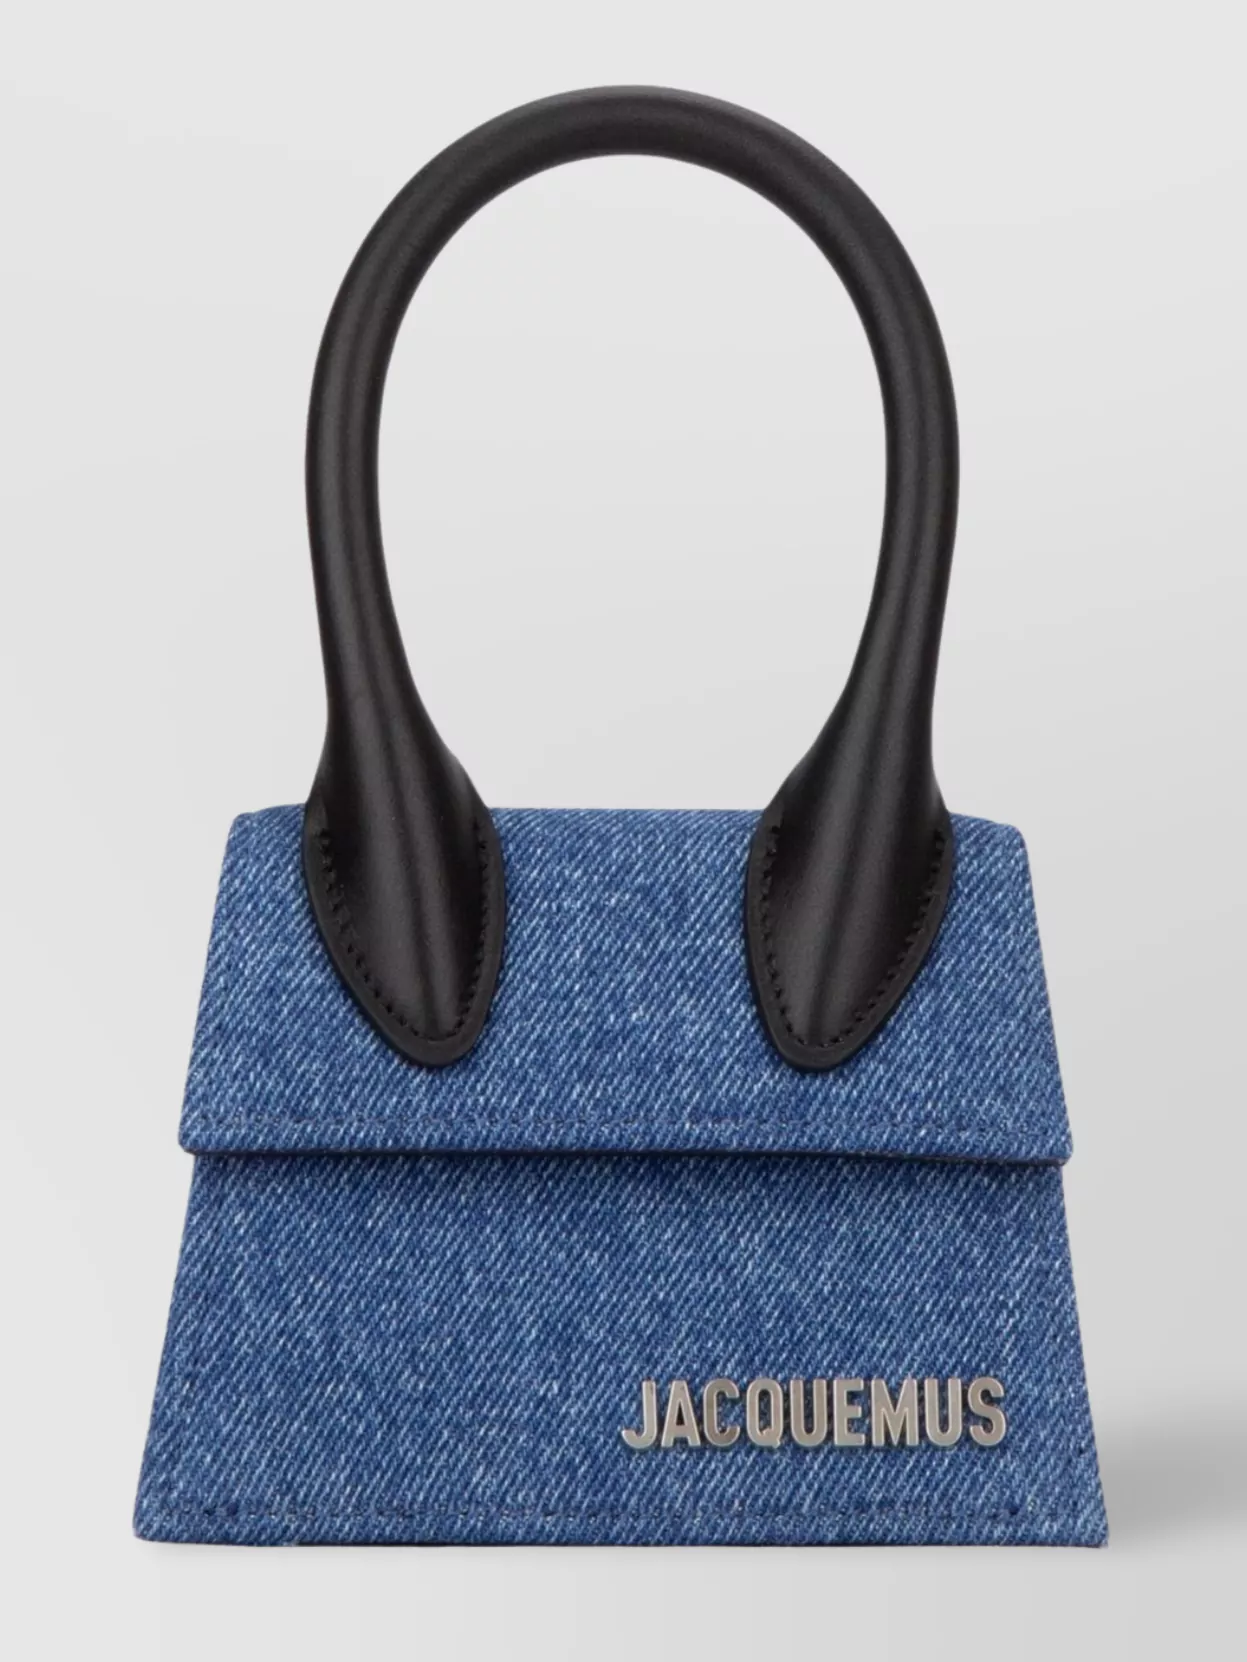 Jacquemus Shoulder Bag Contrast Handles